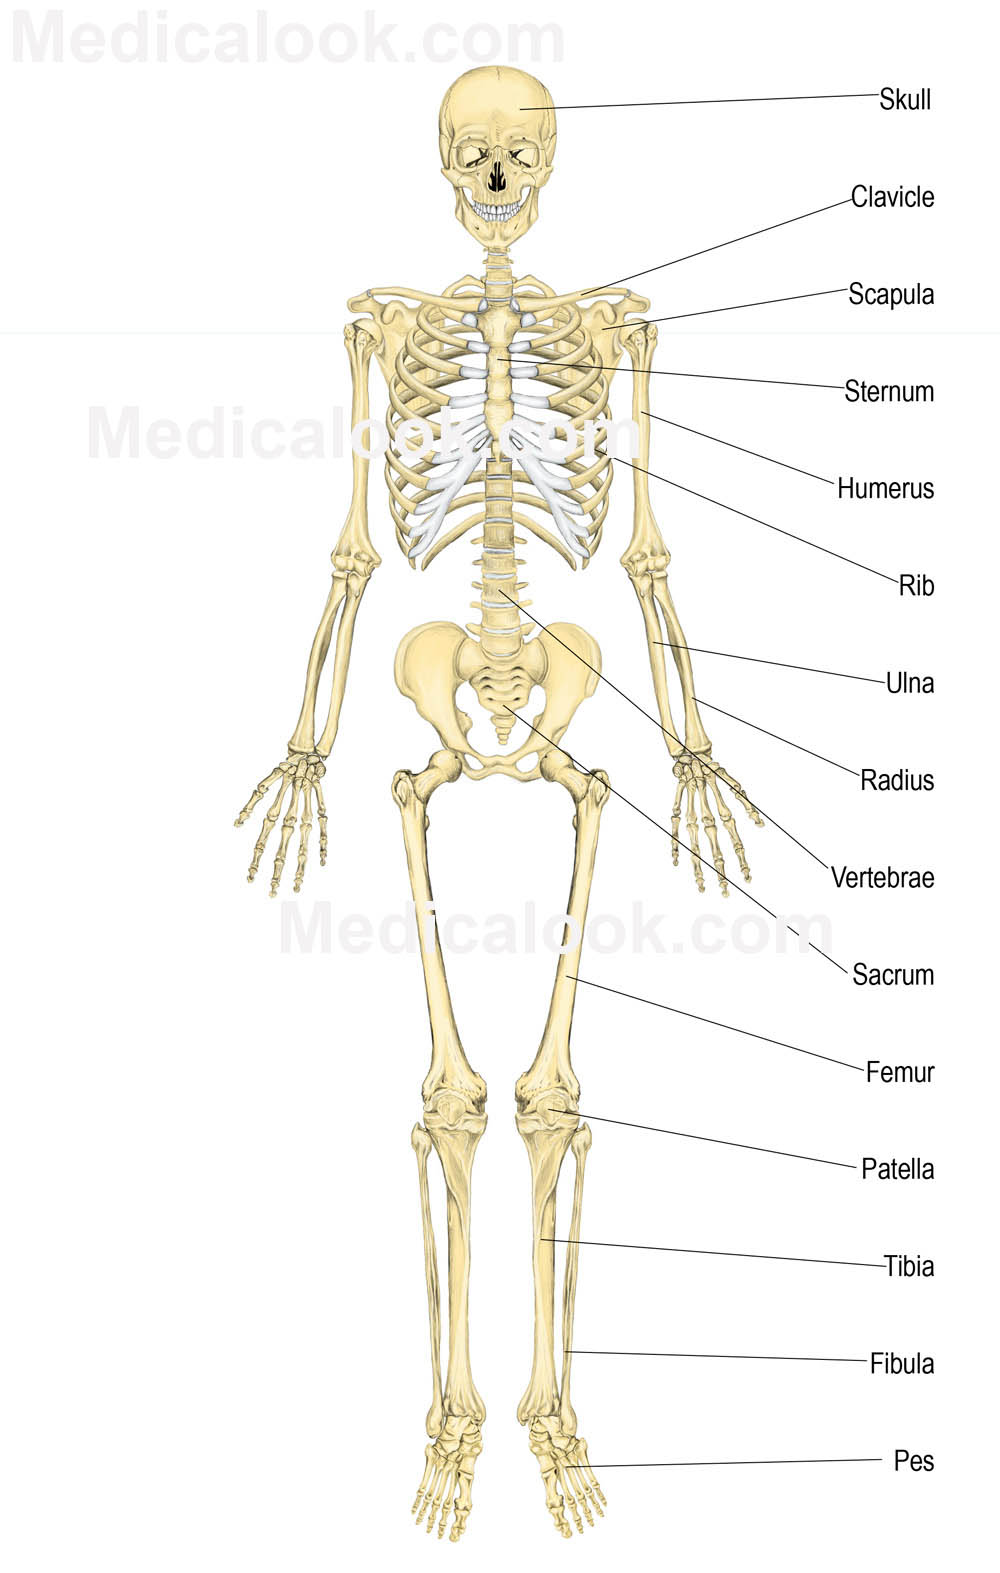 skeletal system quiz - ModernHeal.com